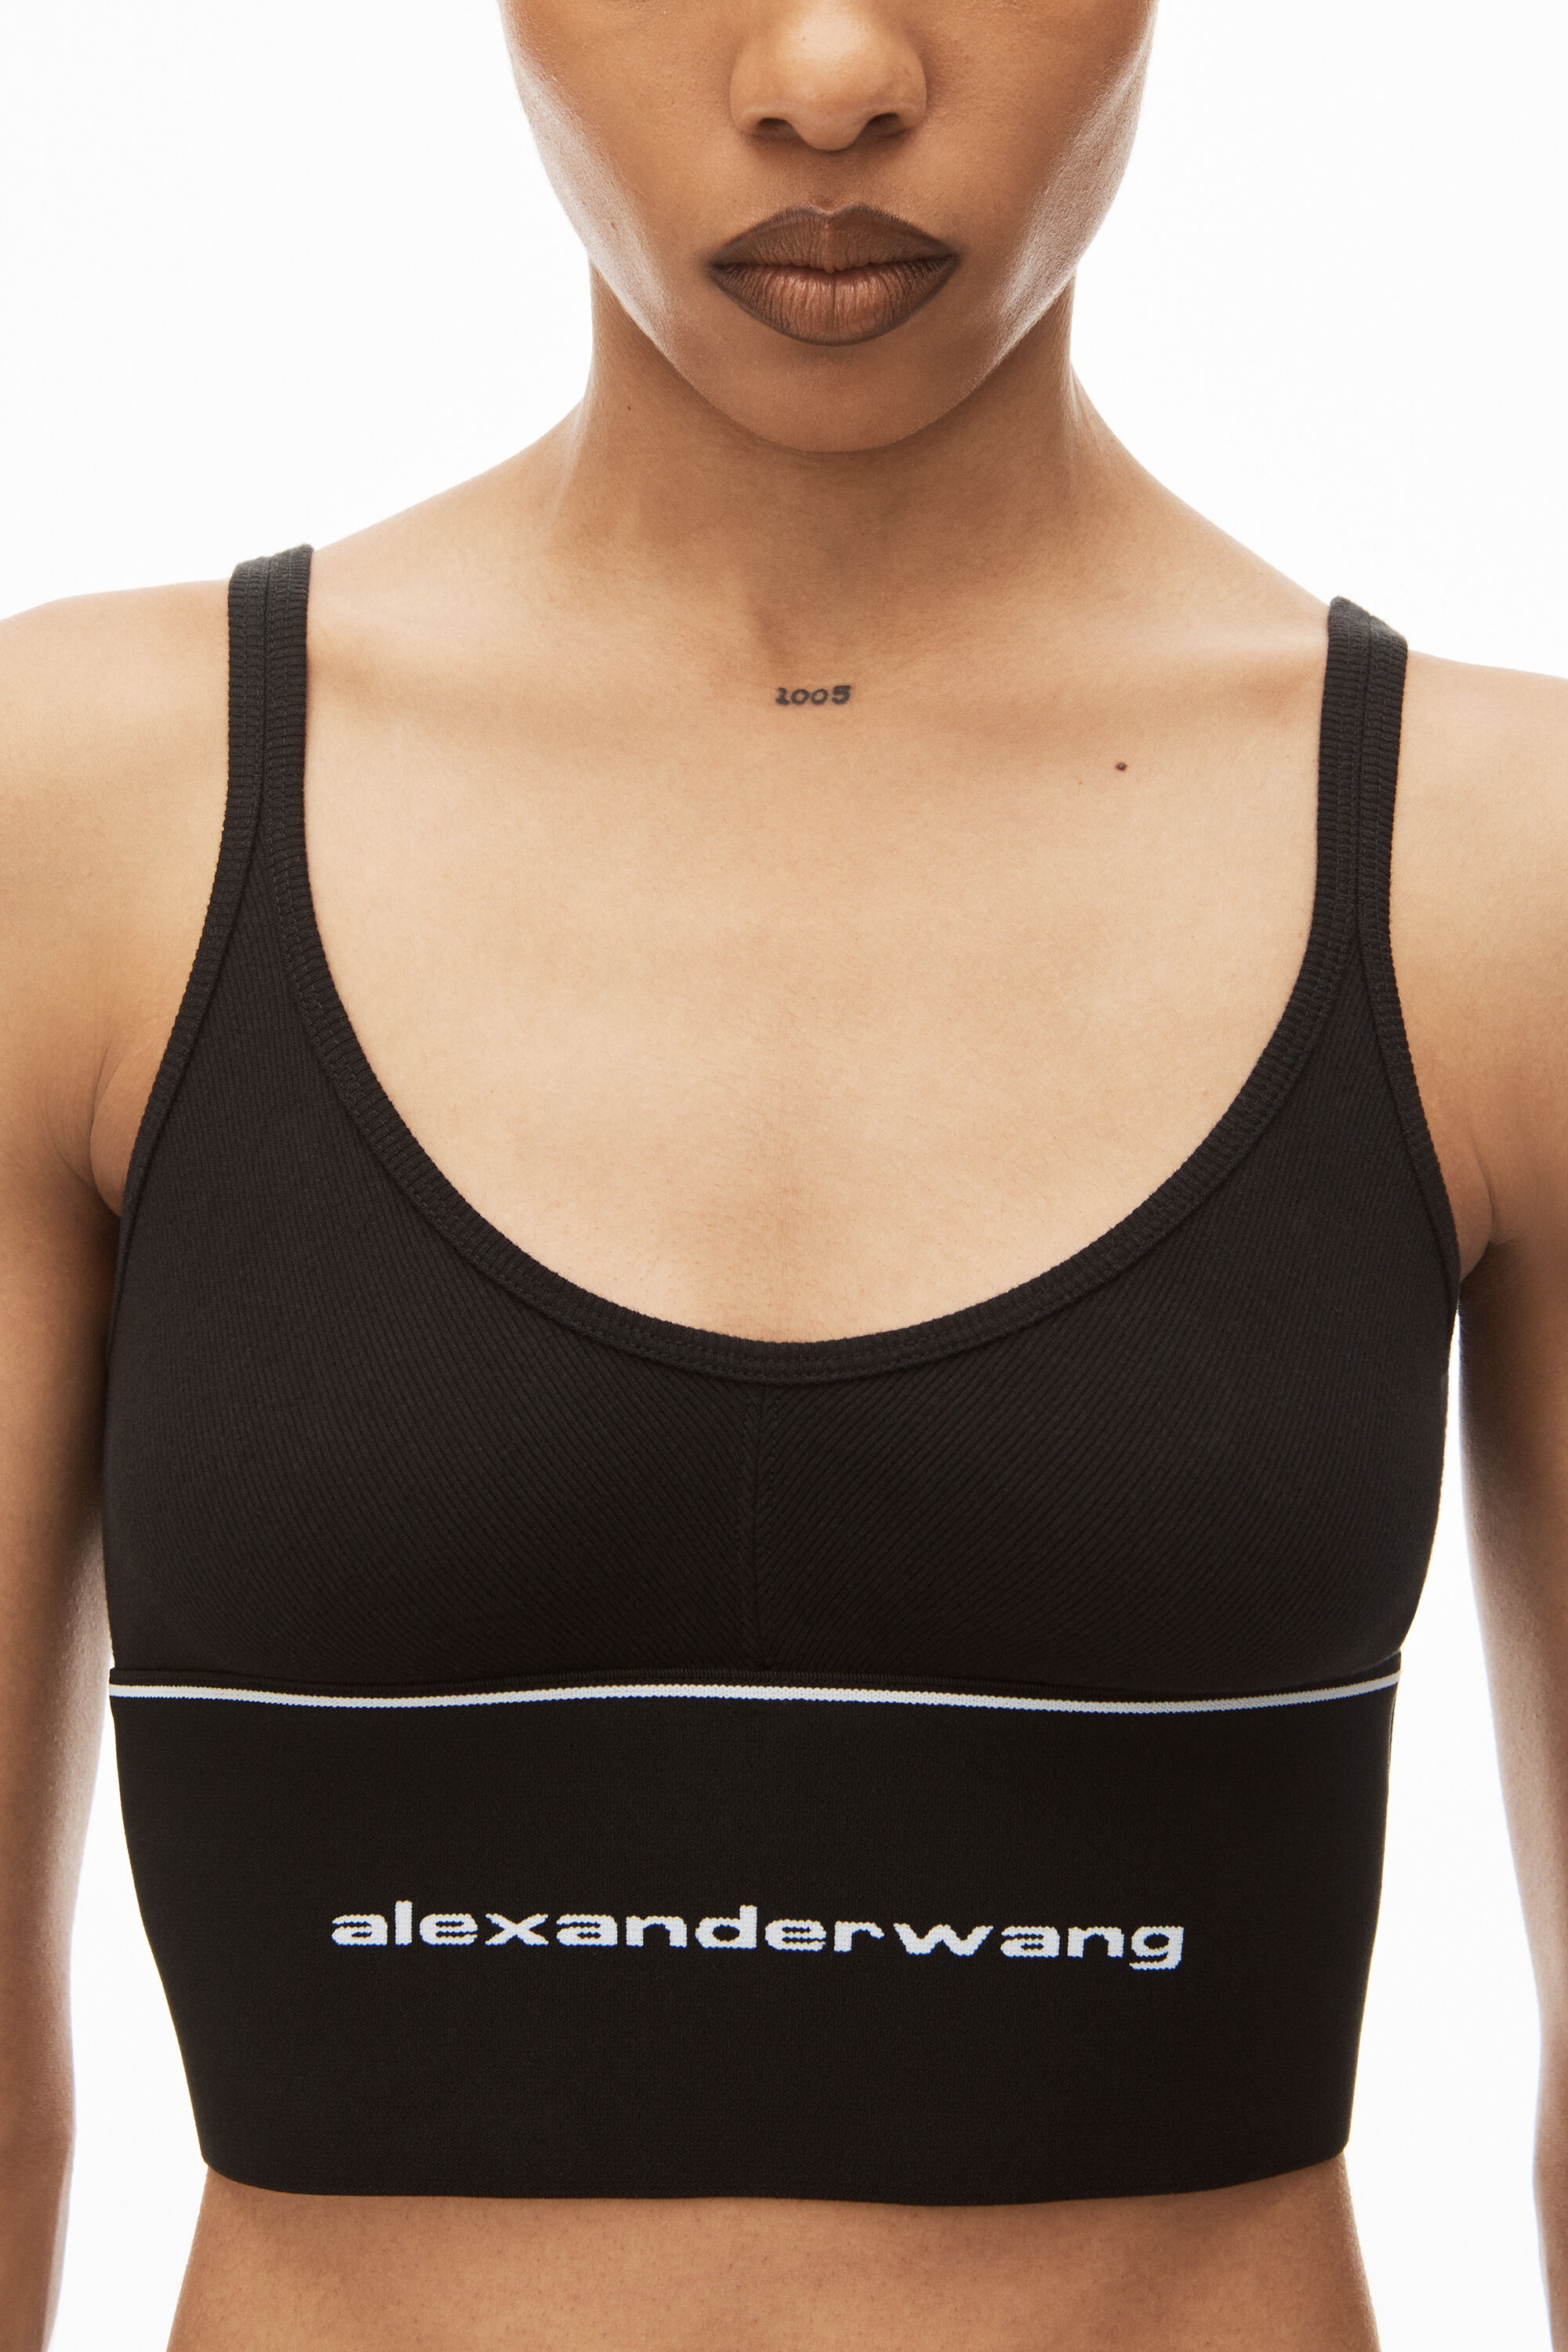 Women's Bra with logo, ALEXANDER WANG